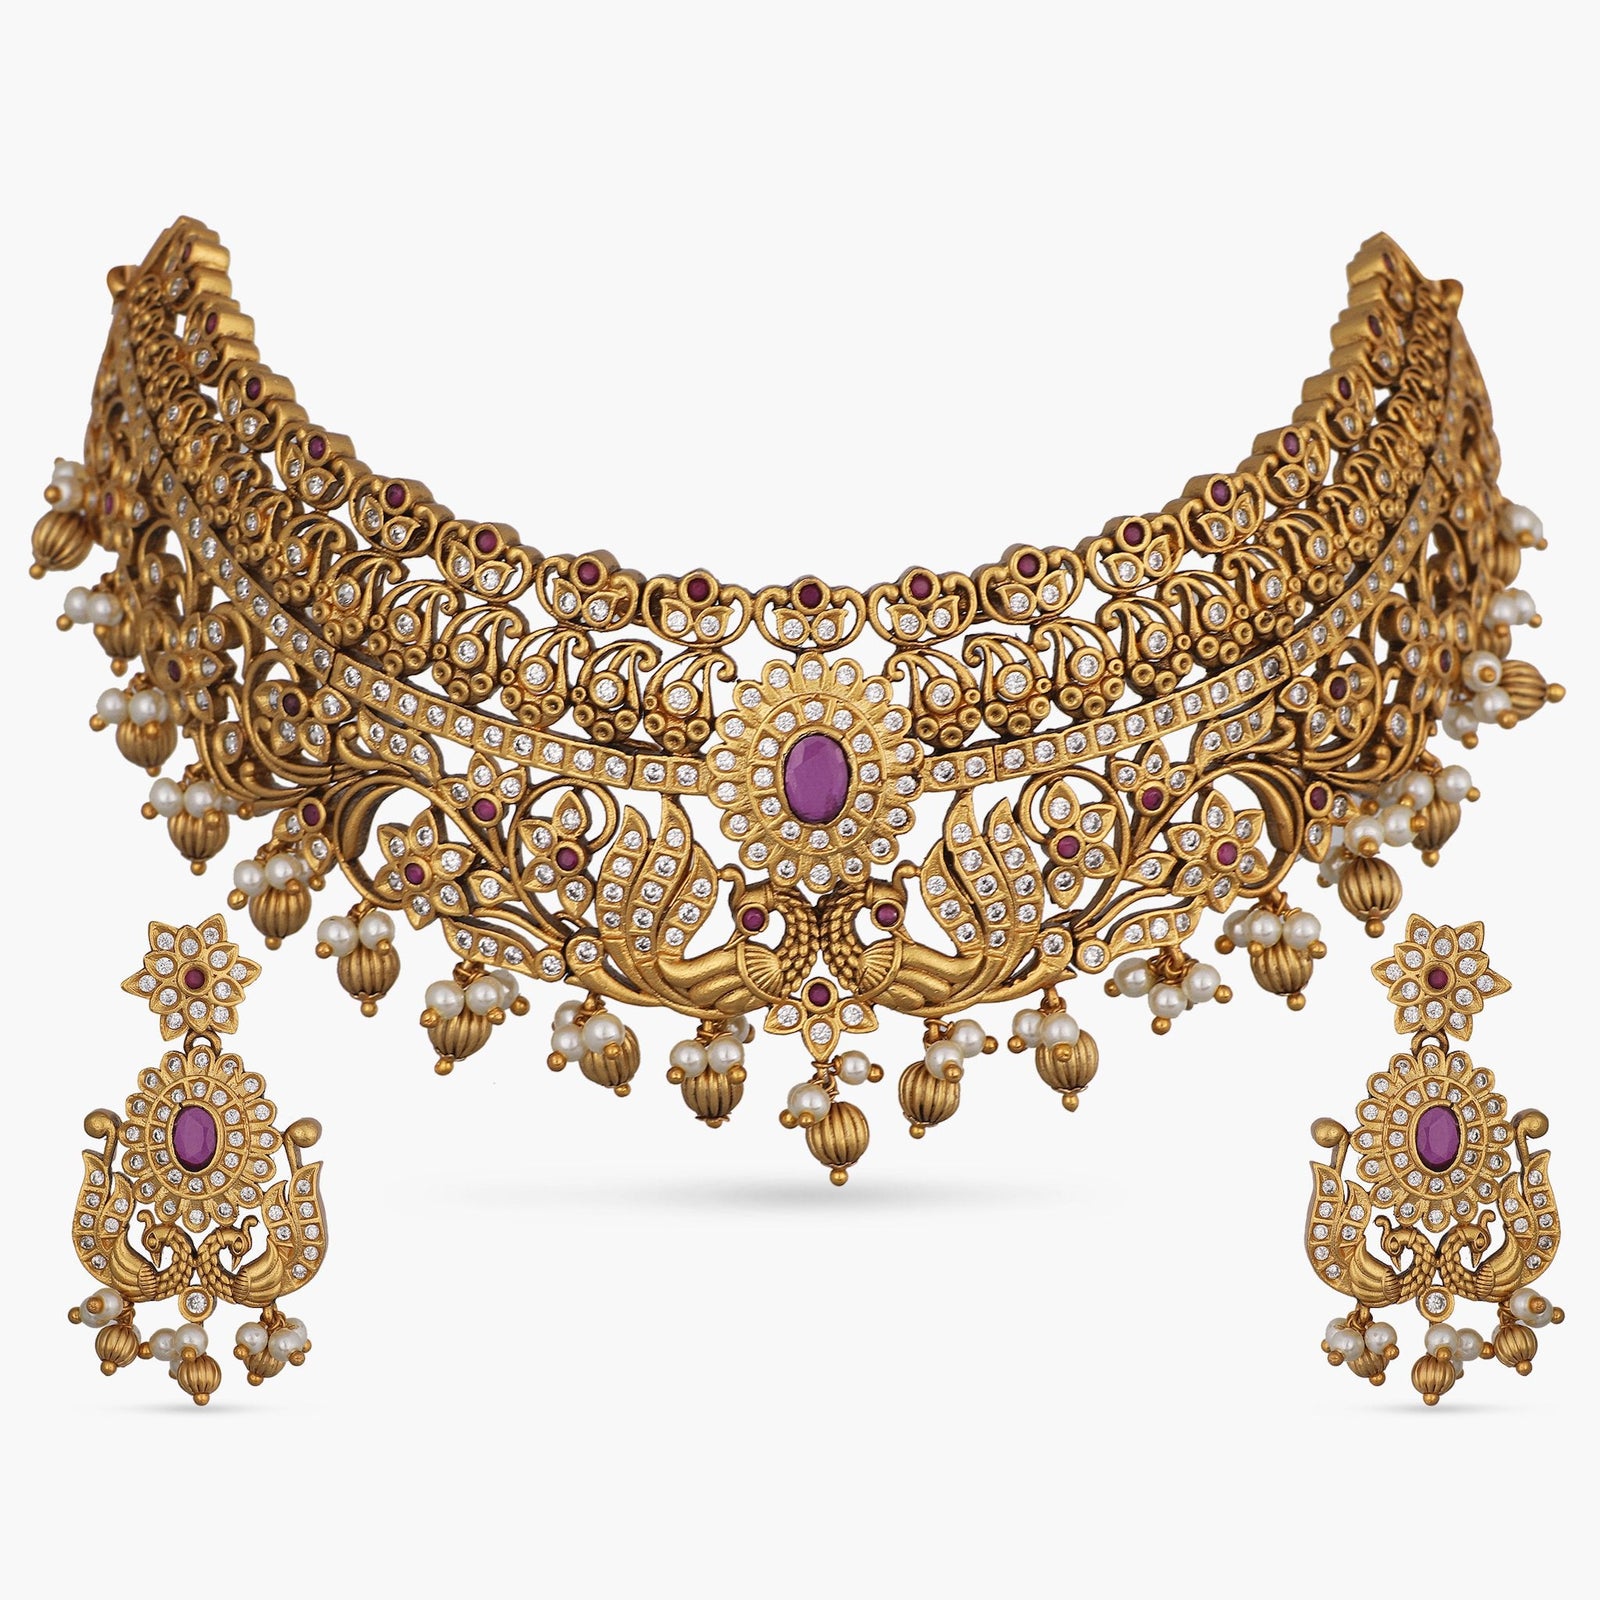 Buy Hearts Necklaces Online   - India's #1 Online